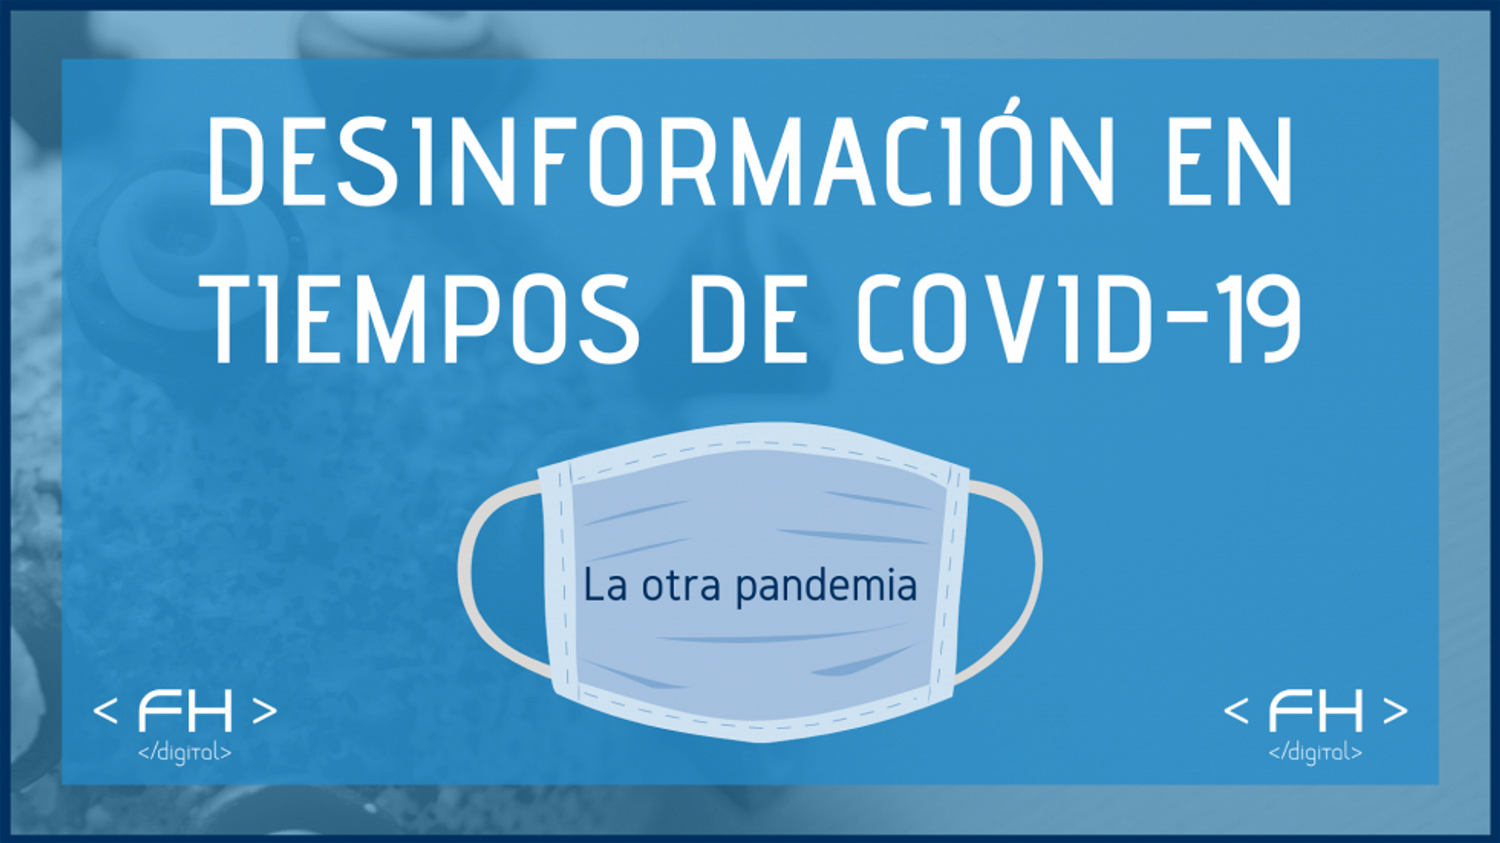 Desinformacion_COVID19_pandemia-1-980x551.png